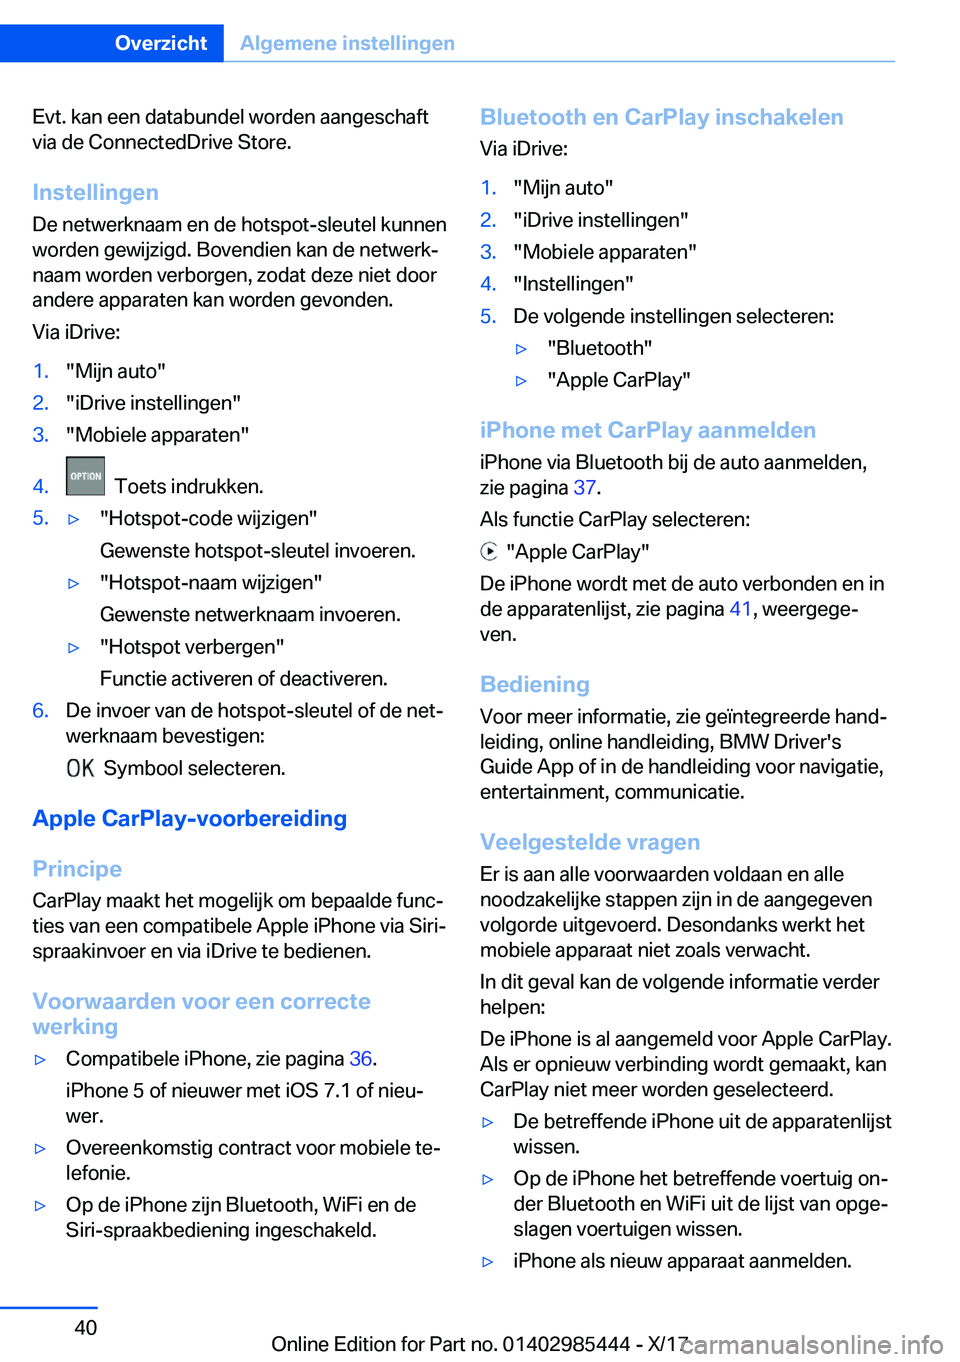 BMW X1 2018  Instructieboekjes (in Dutch) �E�v�t�.� �k�a�n� �e�e�n� �d�a�t�a�b�u�n�d�e�l� �w�o�r�d�e�n� �a�a�n�g�e�s�c�h�a�f�t
�v�i�a� �d�e� �C�o�n�n�e�c�t�e�d�D�r�i�v�e� �S�t�o�r�e�.
�I�n�s�t�e�l�l�i�n�g�e�n �D�e� �n�e�t�w�e�r�k�n�a�a�m� �e�